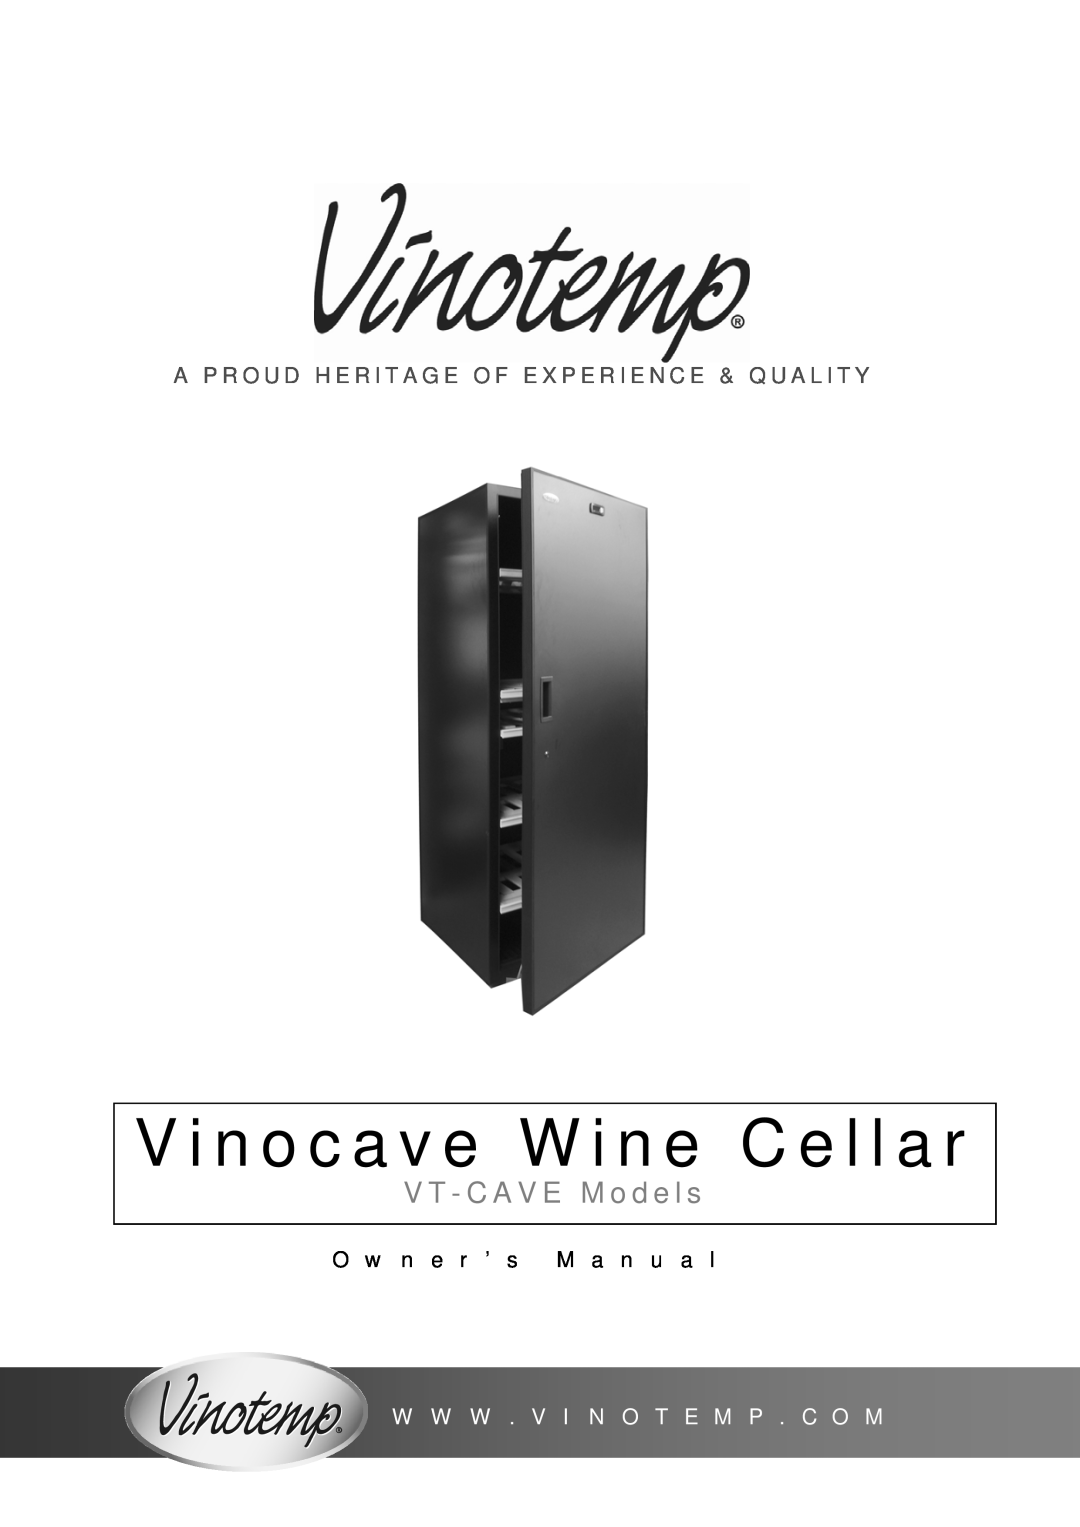 Vinotemp VinoCellier, VinoCave Series, VT-CAVv4 owner manual V i n o c a v e W i n e C e l l a r, V T - C A V E M o d e l s 